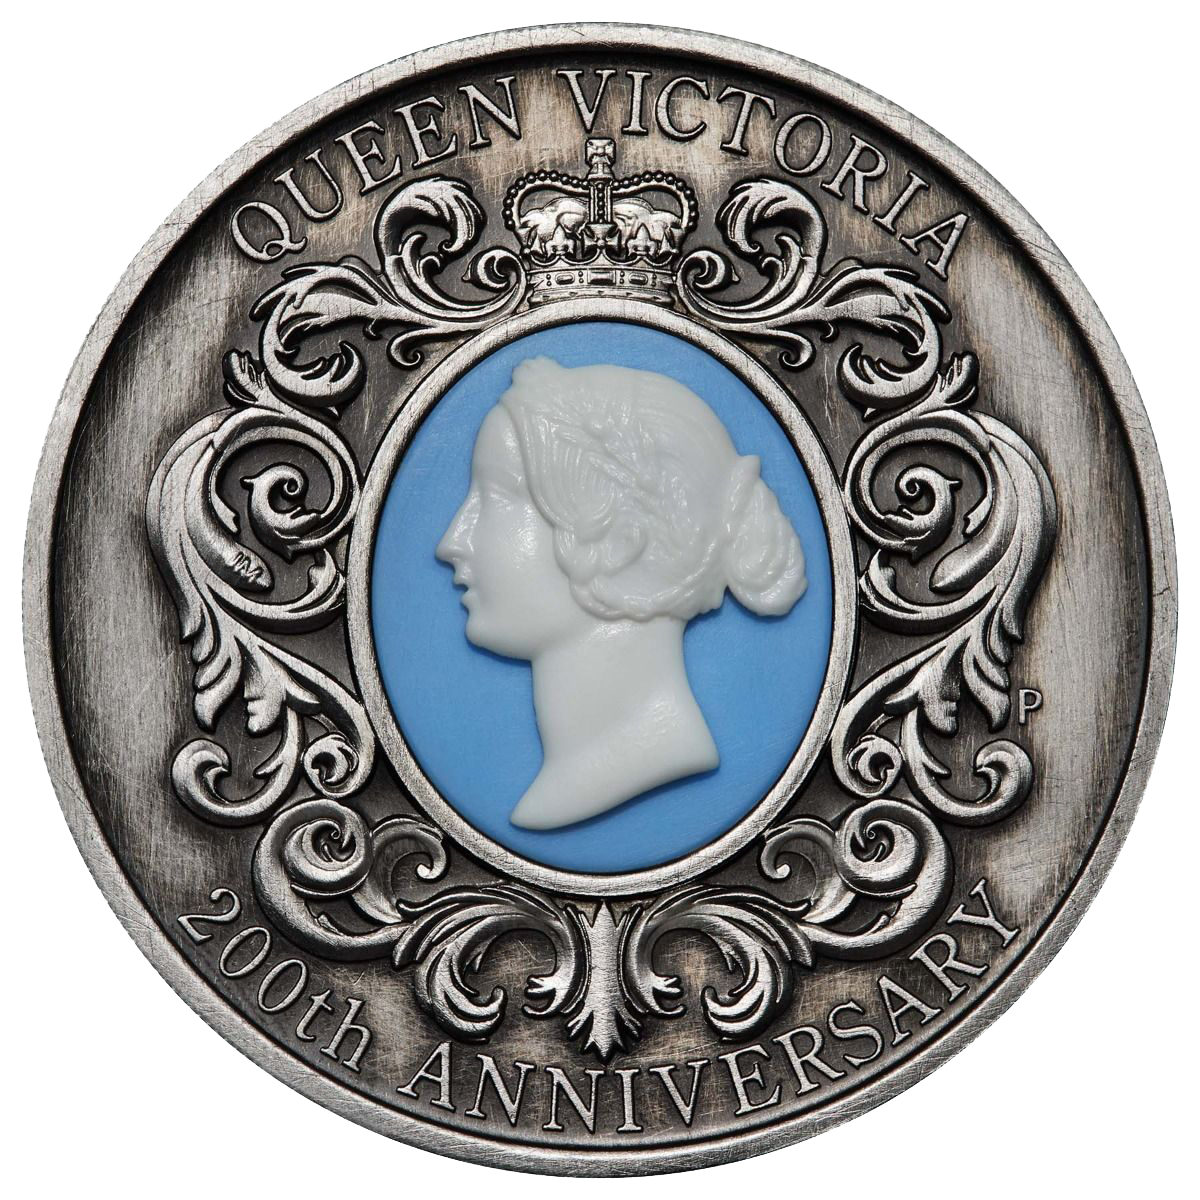 2019 QUEEN VICTORIA 200TH ANNIVERSARY 2oz $2 SILVER Antiqued Cameo COIN